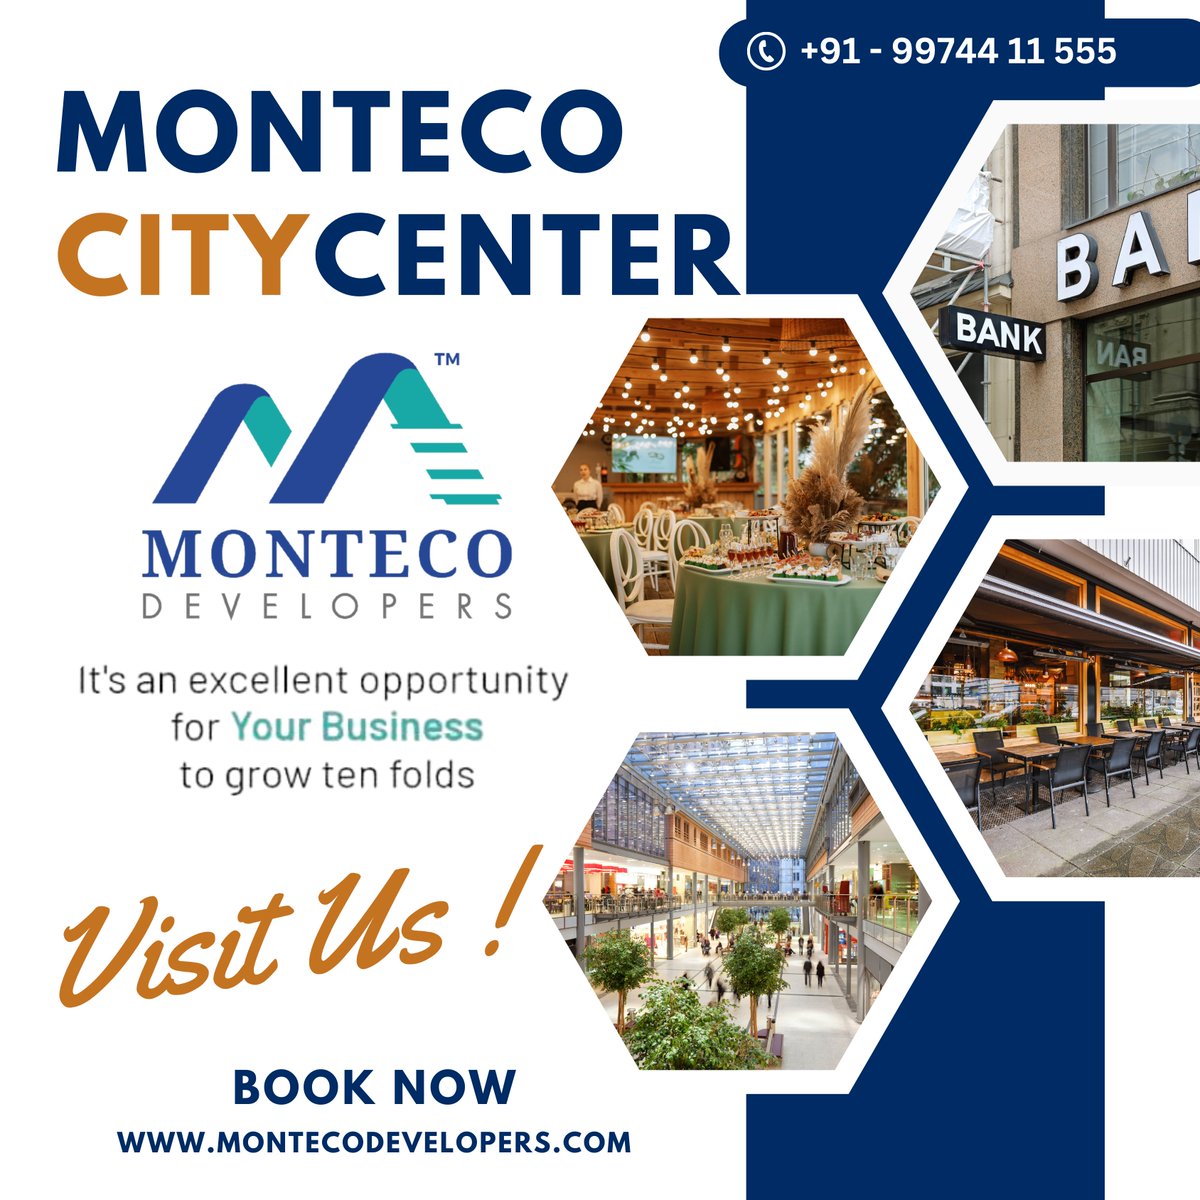 #citycentre #commercialproperty #DholeraSmartCity
𝗕𝗜𝗚 𝐋𝐀𝐍𝐃 𝐏𝐀𝐑𝐂𝐄𝐋 𝗜𝗡 𝗗𝗛𝗢𝗟𝗘𝗥𝗔 𝗪𝗜𝗧𝗛 𝗠𝗢𝗡𝗧𝗘𝗖𝗢 𝗗𝗘𝗩𝗘𝗟𝗢𝗣𝗘𝗥𝗦.
𝗙𝗼𝗿 𝗠𝗼𝗿𝗲 𝗜𝗻𝗳𝗼𝗿𝗺𝗮𝘁𝗶𝗼𝗻 𝗖𝗮𝗹𝗹: 𝟵𝟵𝟳𝟰𝟰𝟭𝟭𝟱𝟱𝟱
#MontecoDevelopers #DholeraSIR #LandInvestment #RealEstate